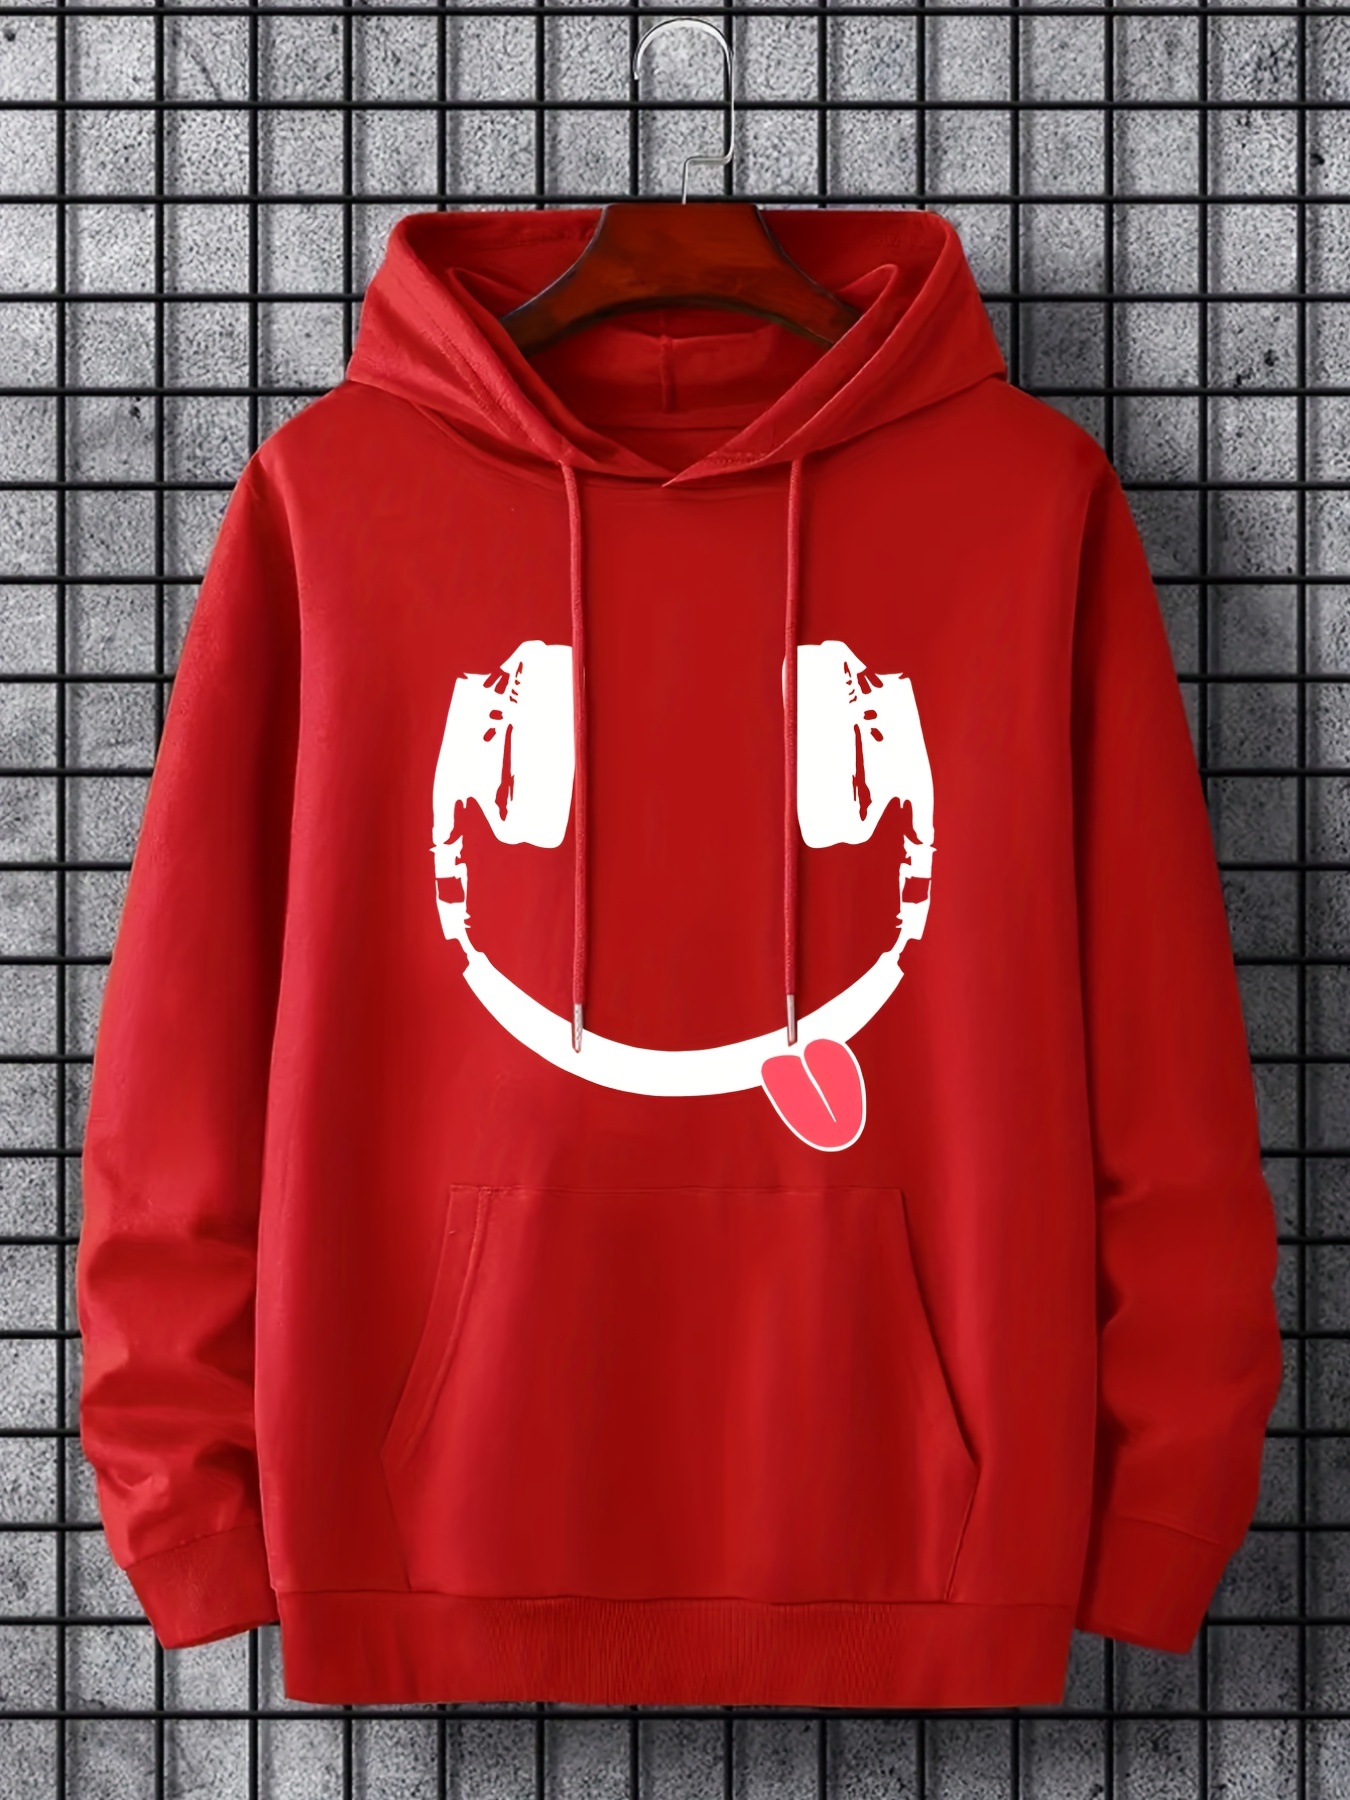 headphone smile print hoodie hoodies for men mens casual graphic design pullover hooded sweatshirt with kangaroo pocket streetwear for winter fall as gifts details 10